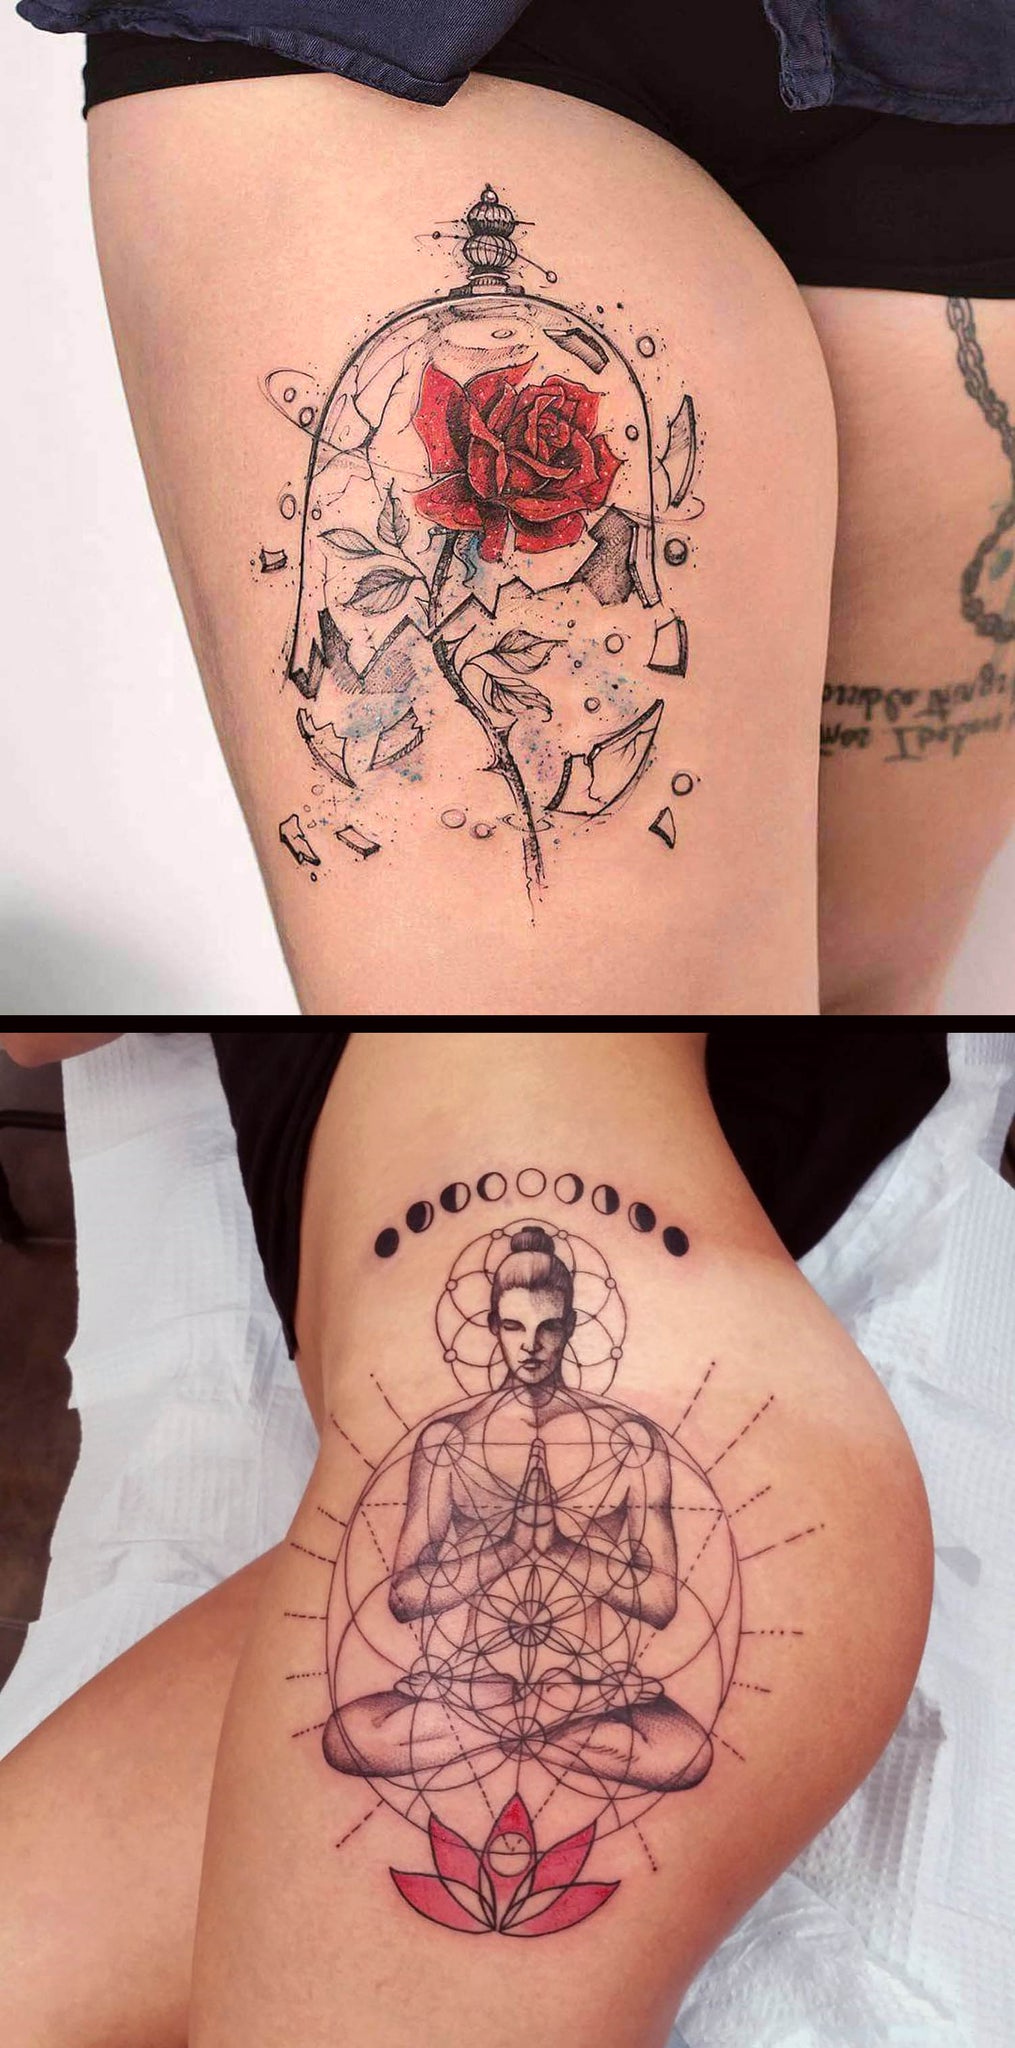 Creative Geometric Tribal Buddha Tattoo Ideas for Women - Beauty and the Beast Lotus Rose Hip Tat - ideas creativas de tatuaje de cadera - www.MyBodiArt.com